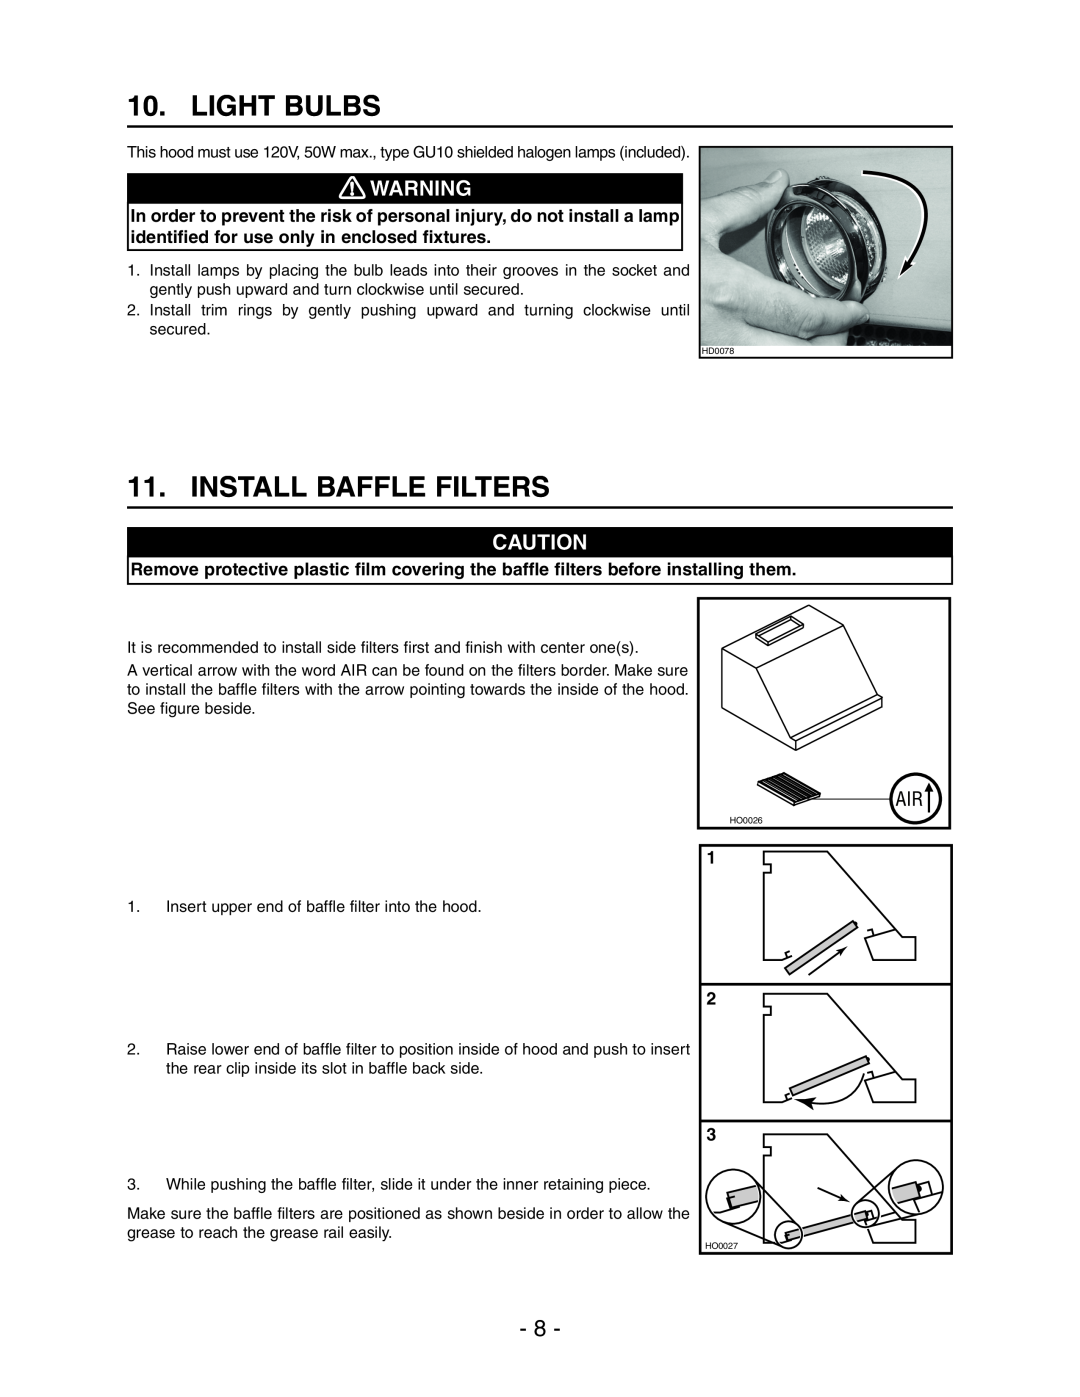 Best WPD28I installation instructions Light Bulbs, Install Baffle Filters 